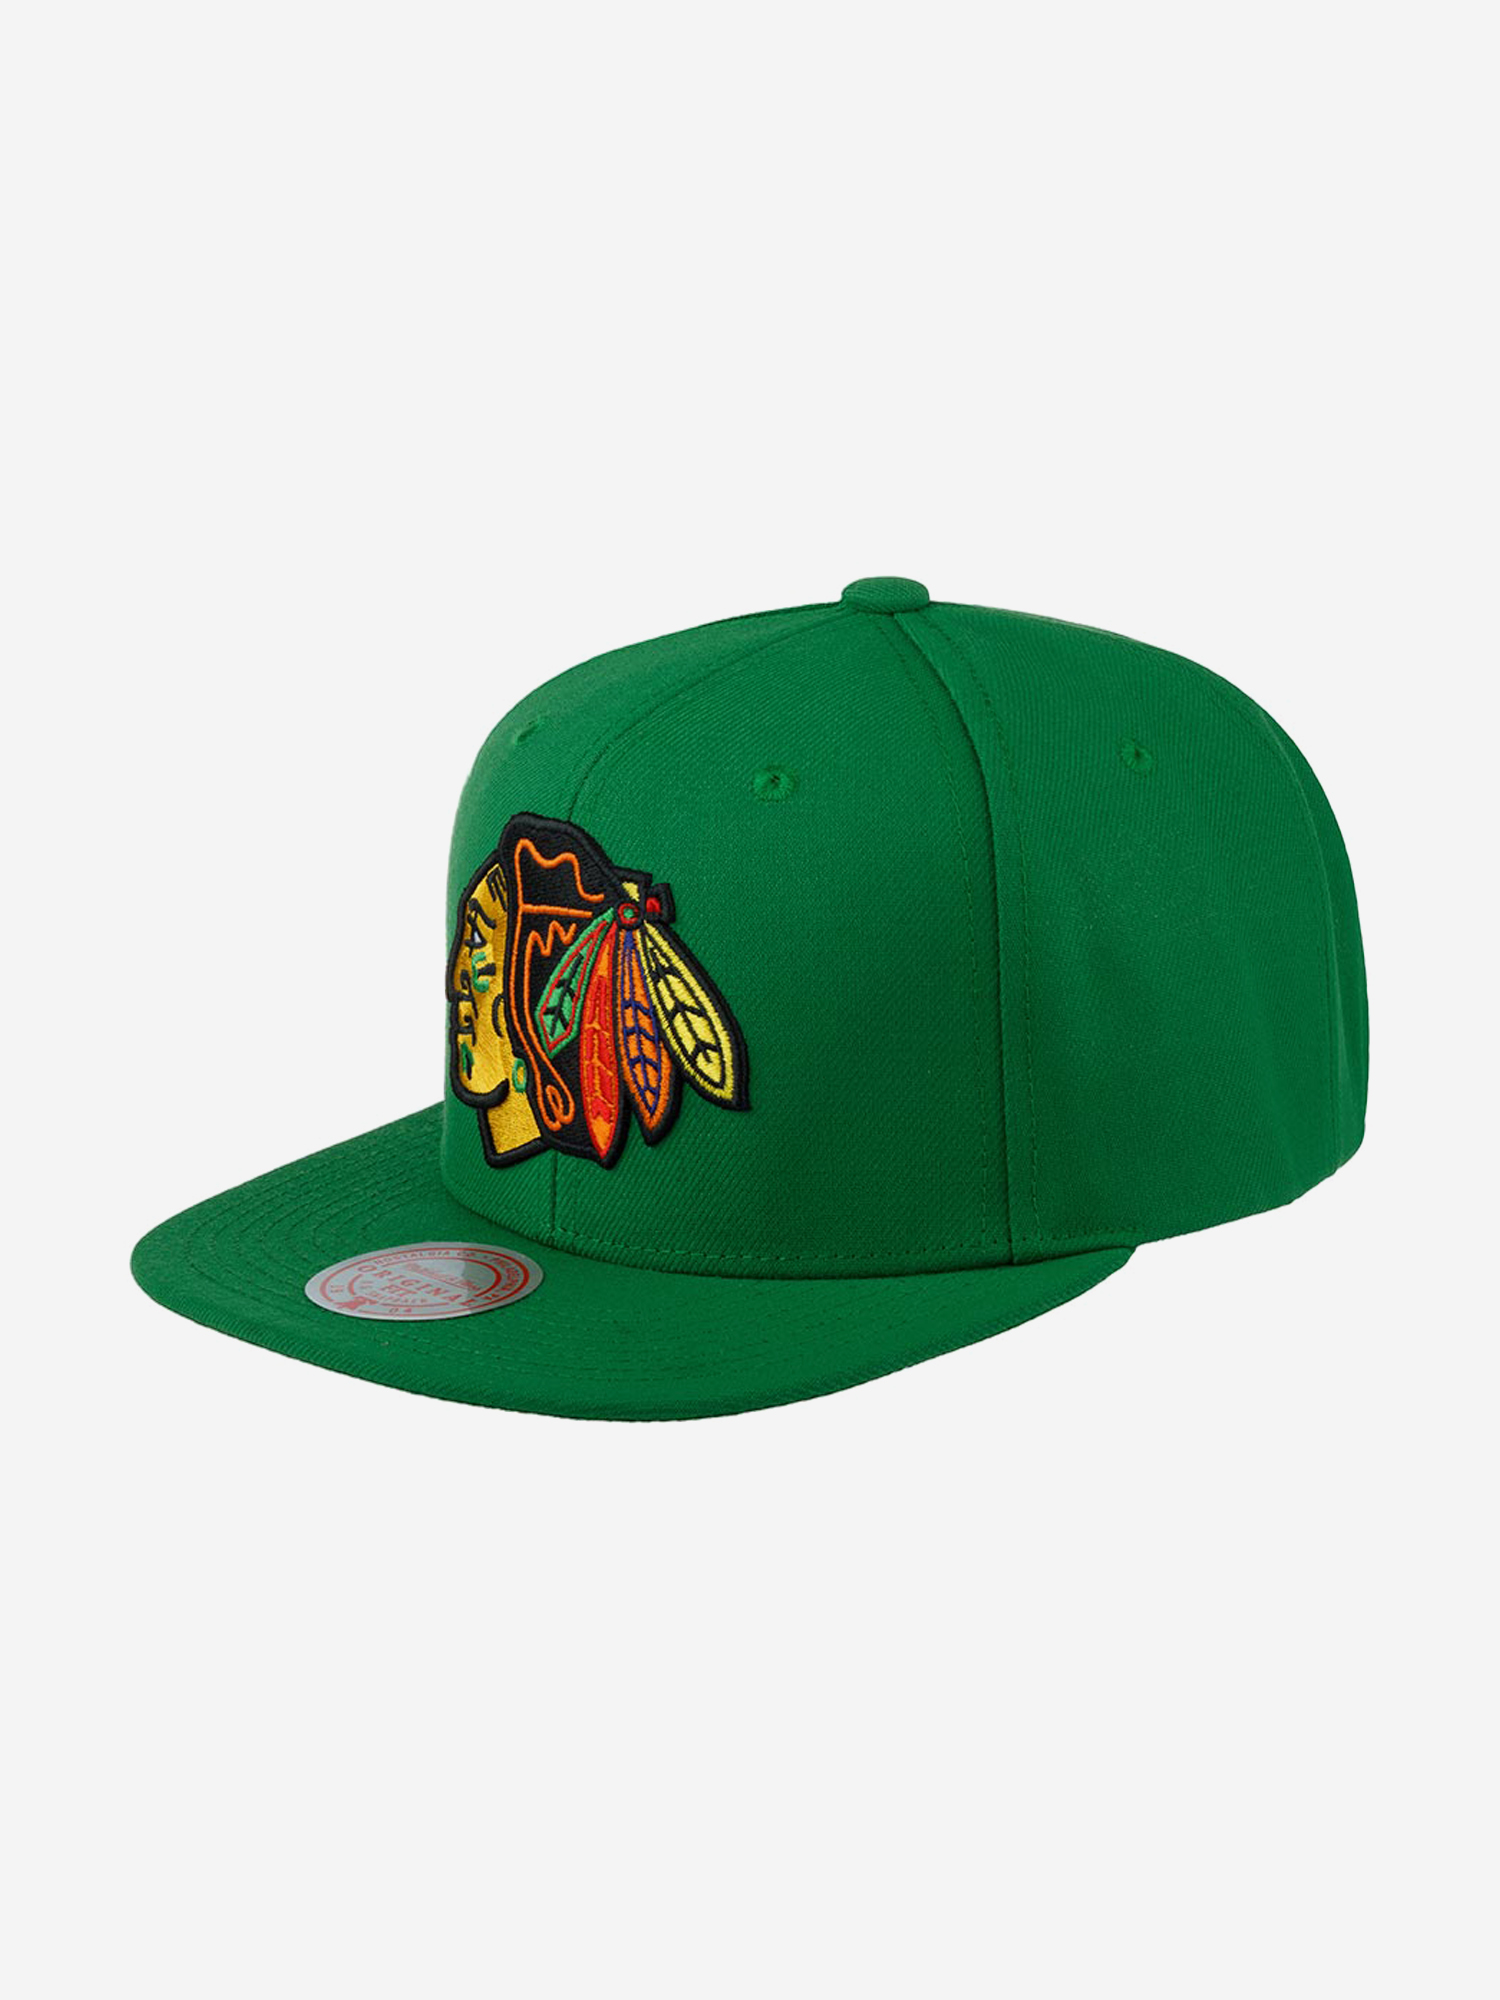 Бейсболка с прямым козырьком MITCHELL NESS 6HSSDX22015-CBHGREN Chicago Blackhawks NHL (зеленый), Зеленый